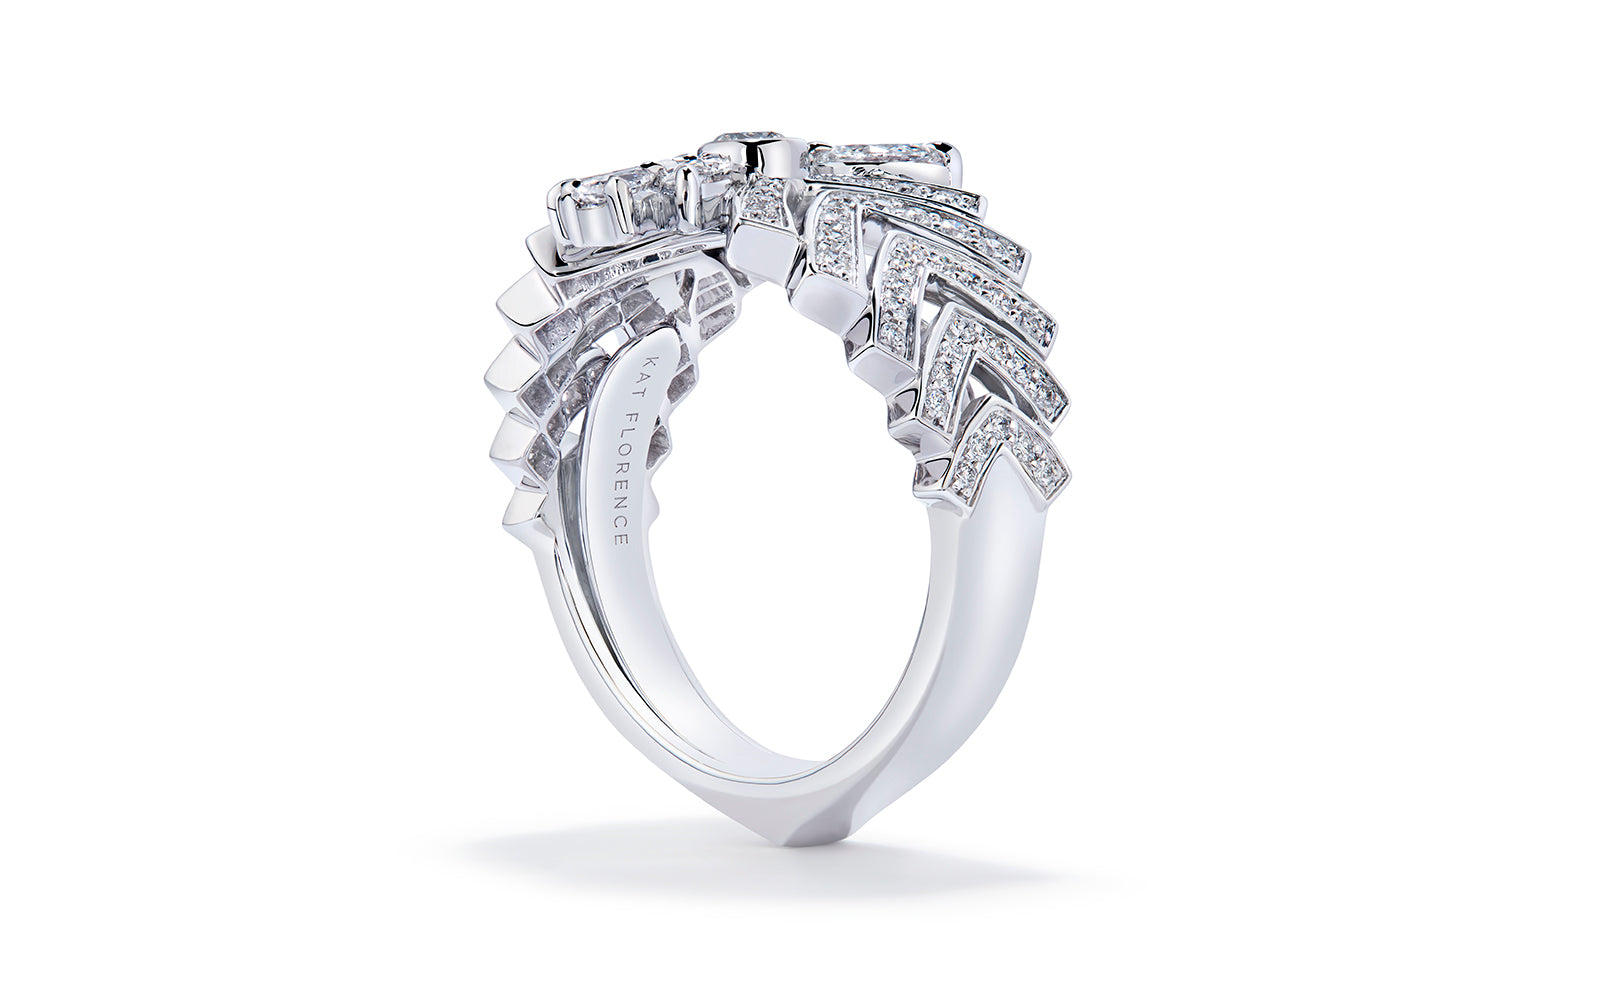 1.05ct D Flawless Diamond Ring set in 18K White Gold